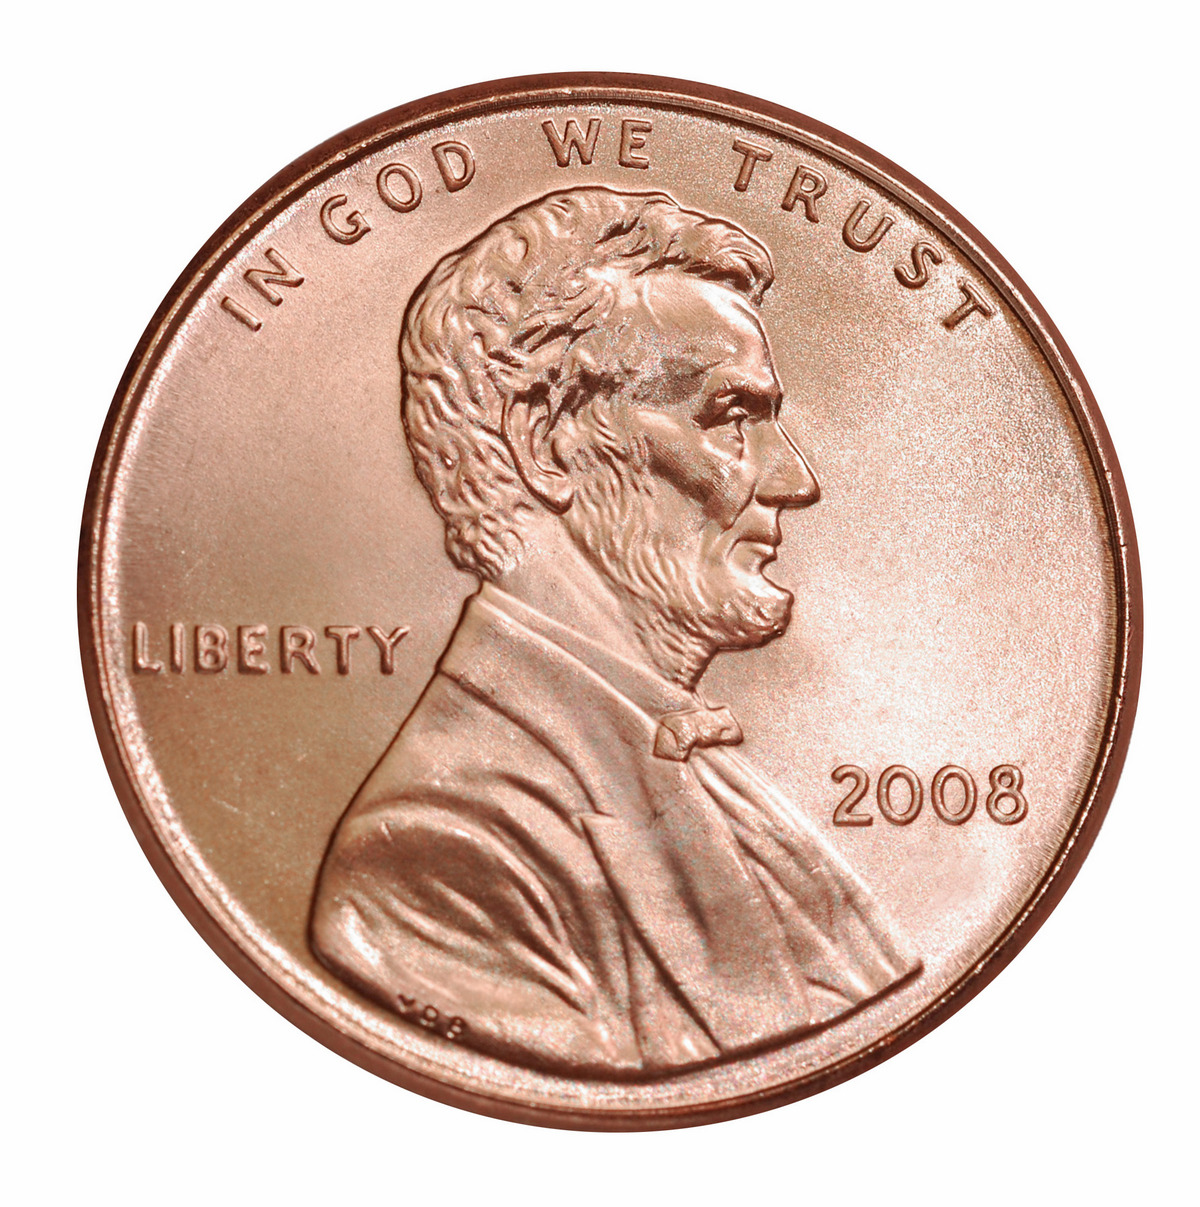 A Penny